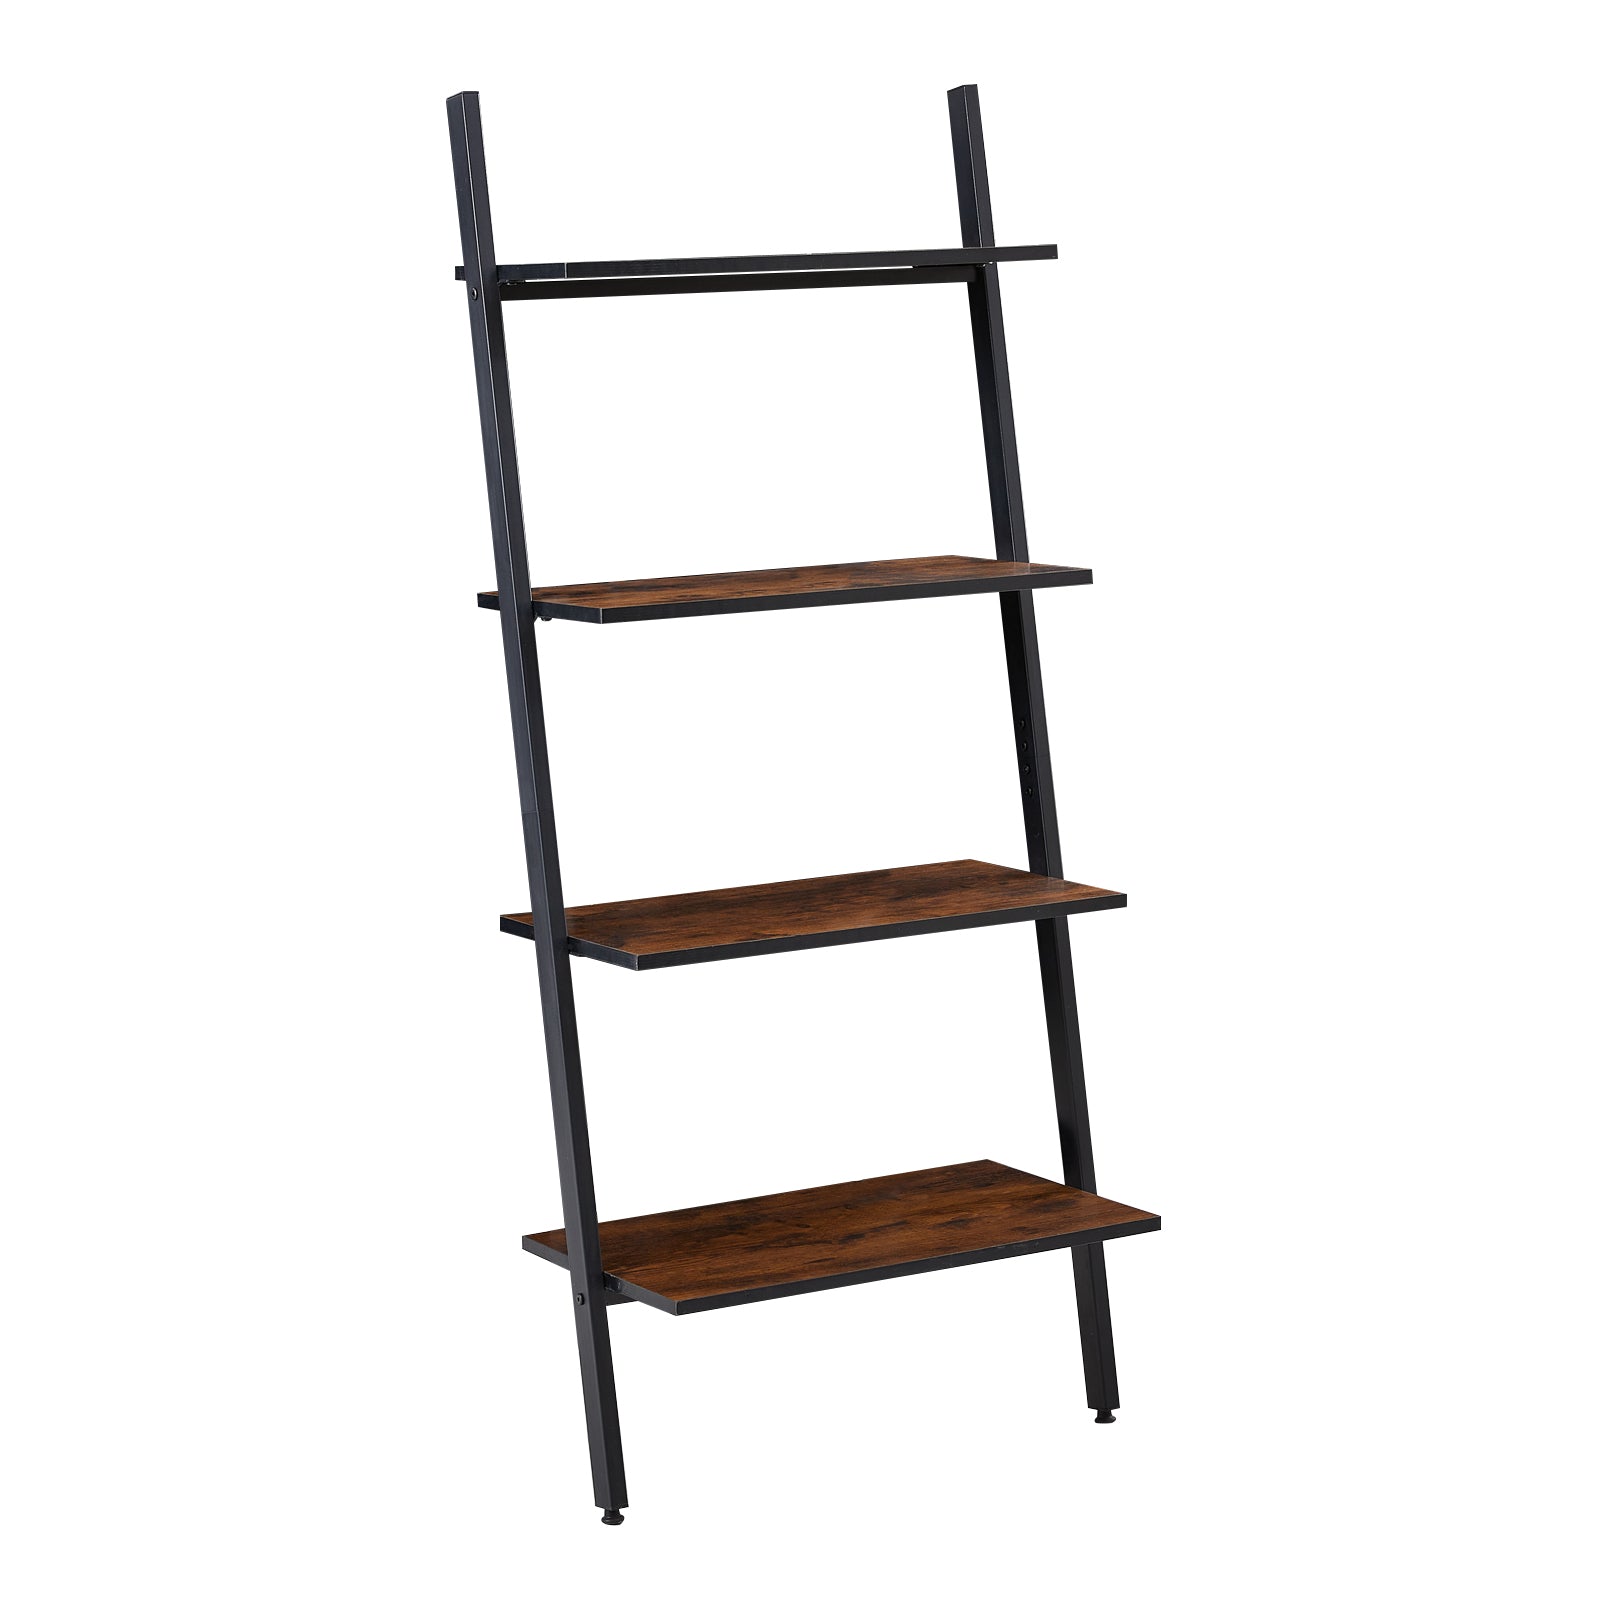 PAW Rustic Ladder Bookshelf, 4-Tier Ladder Shelf Standing Leaning Book Shelves - Rustic Brown